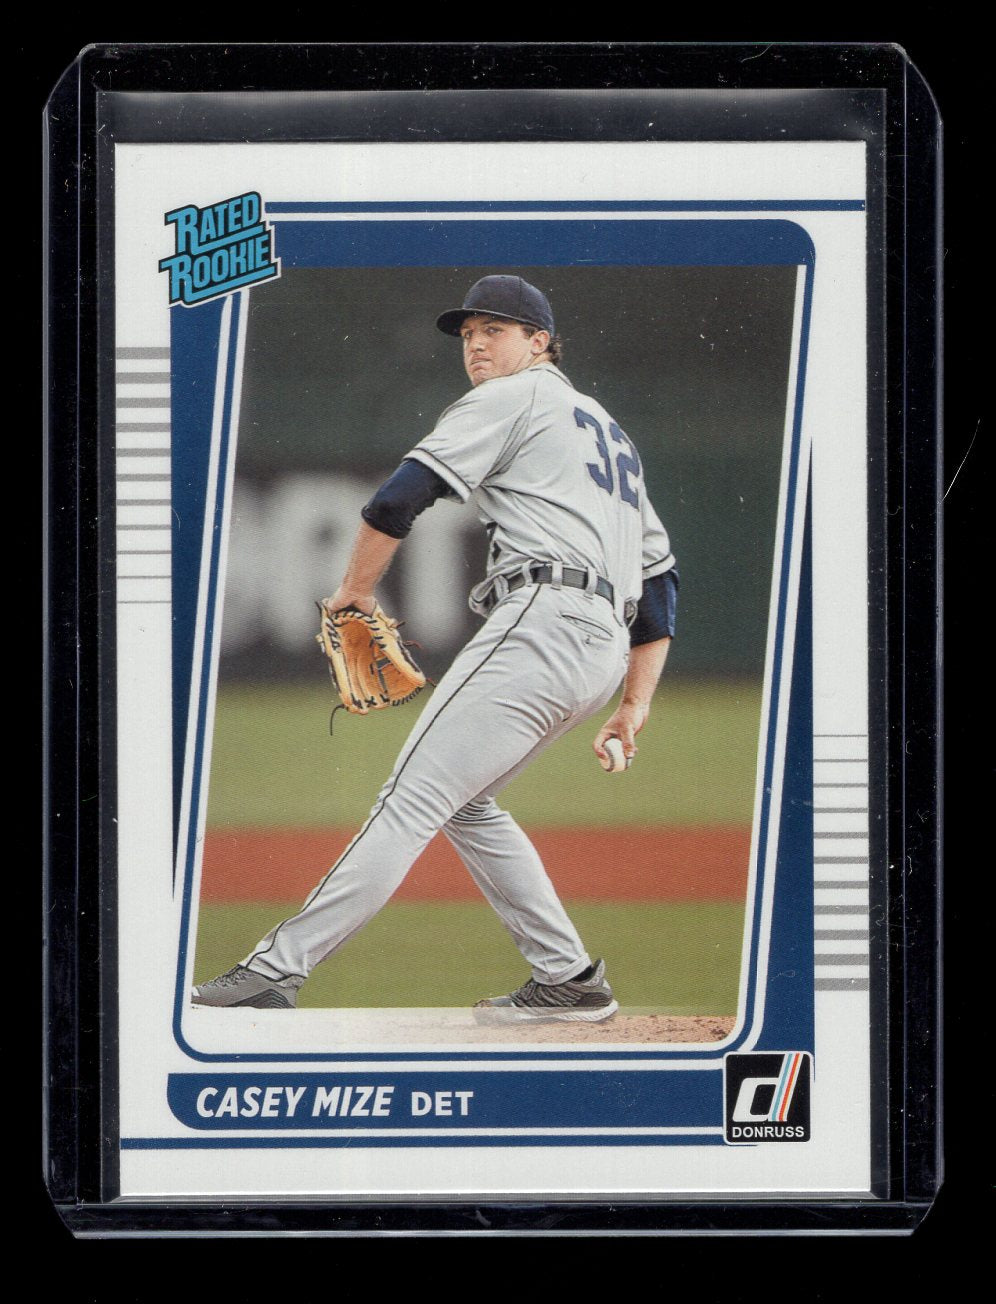 2021 Donruss #39 Casey Mize Rated Rookie (Detroit Tigers)